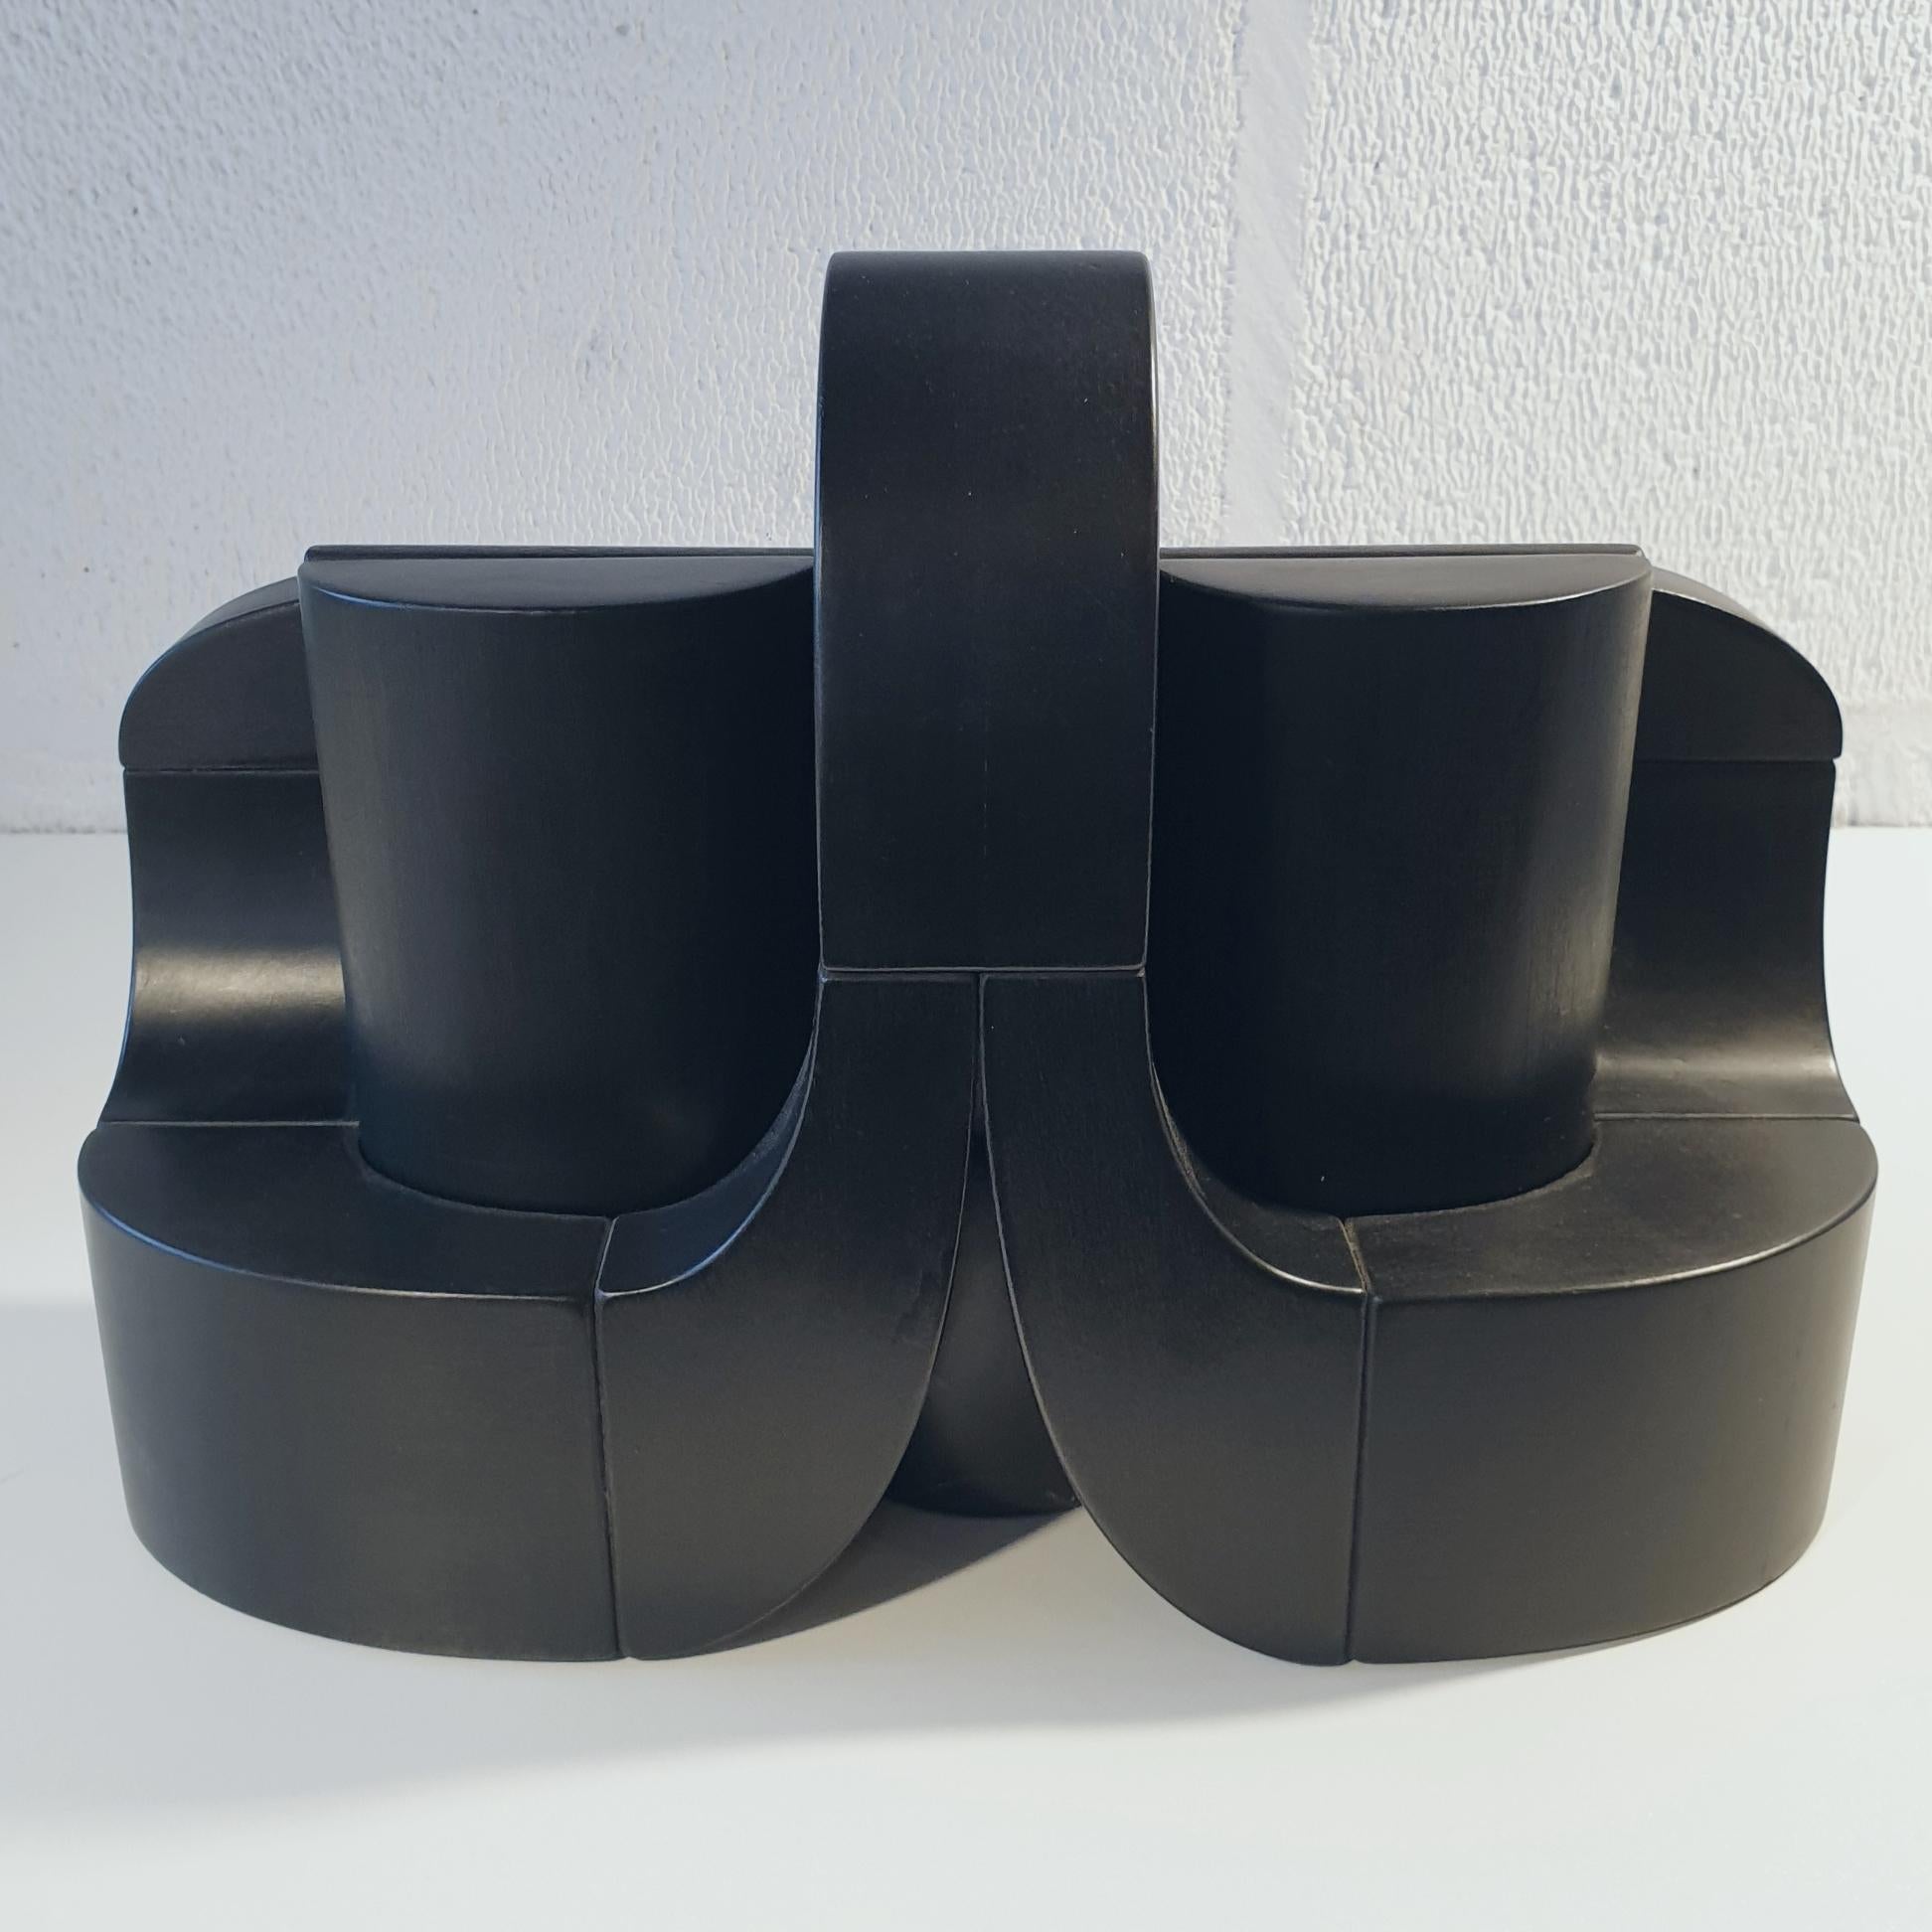 Henk van Putten Abstract Sculpture - Fantasy & Fugue - black contemporary modern abstract geometric wood sculpture